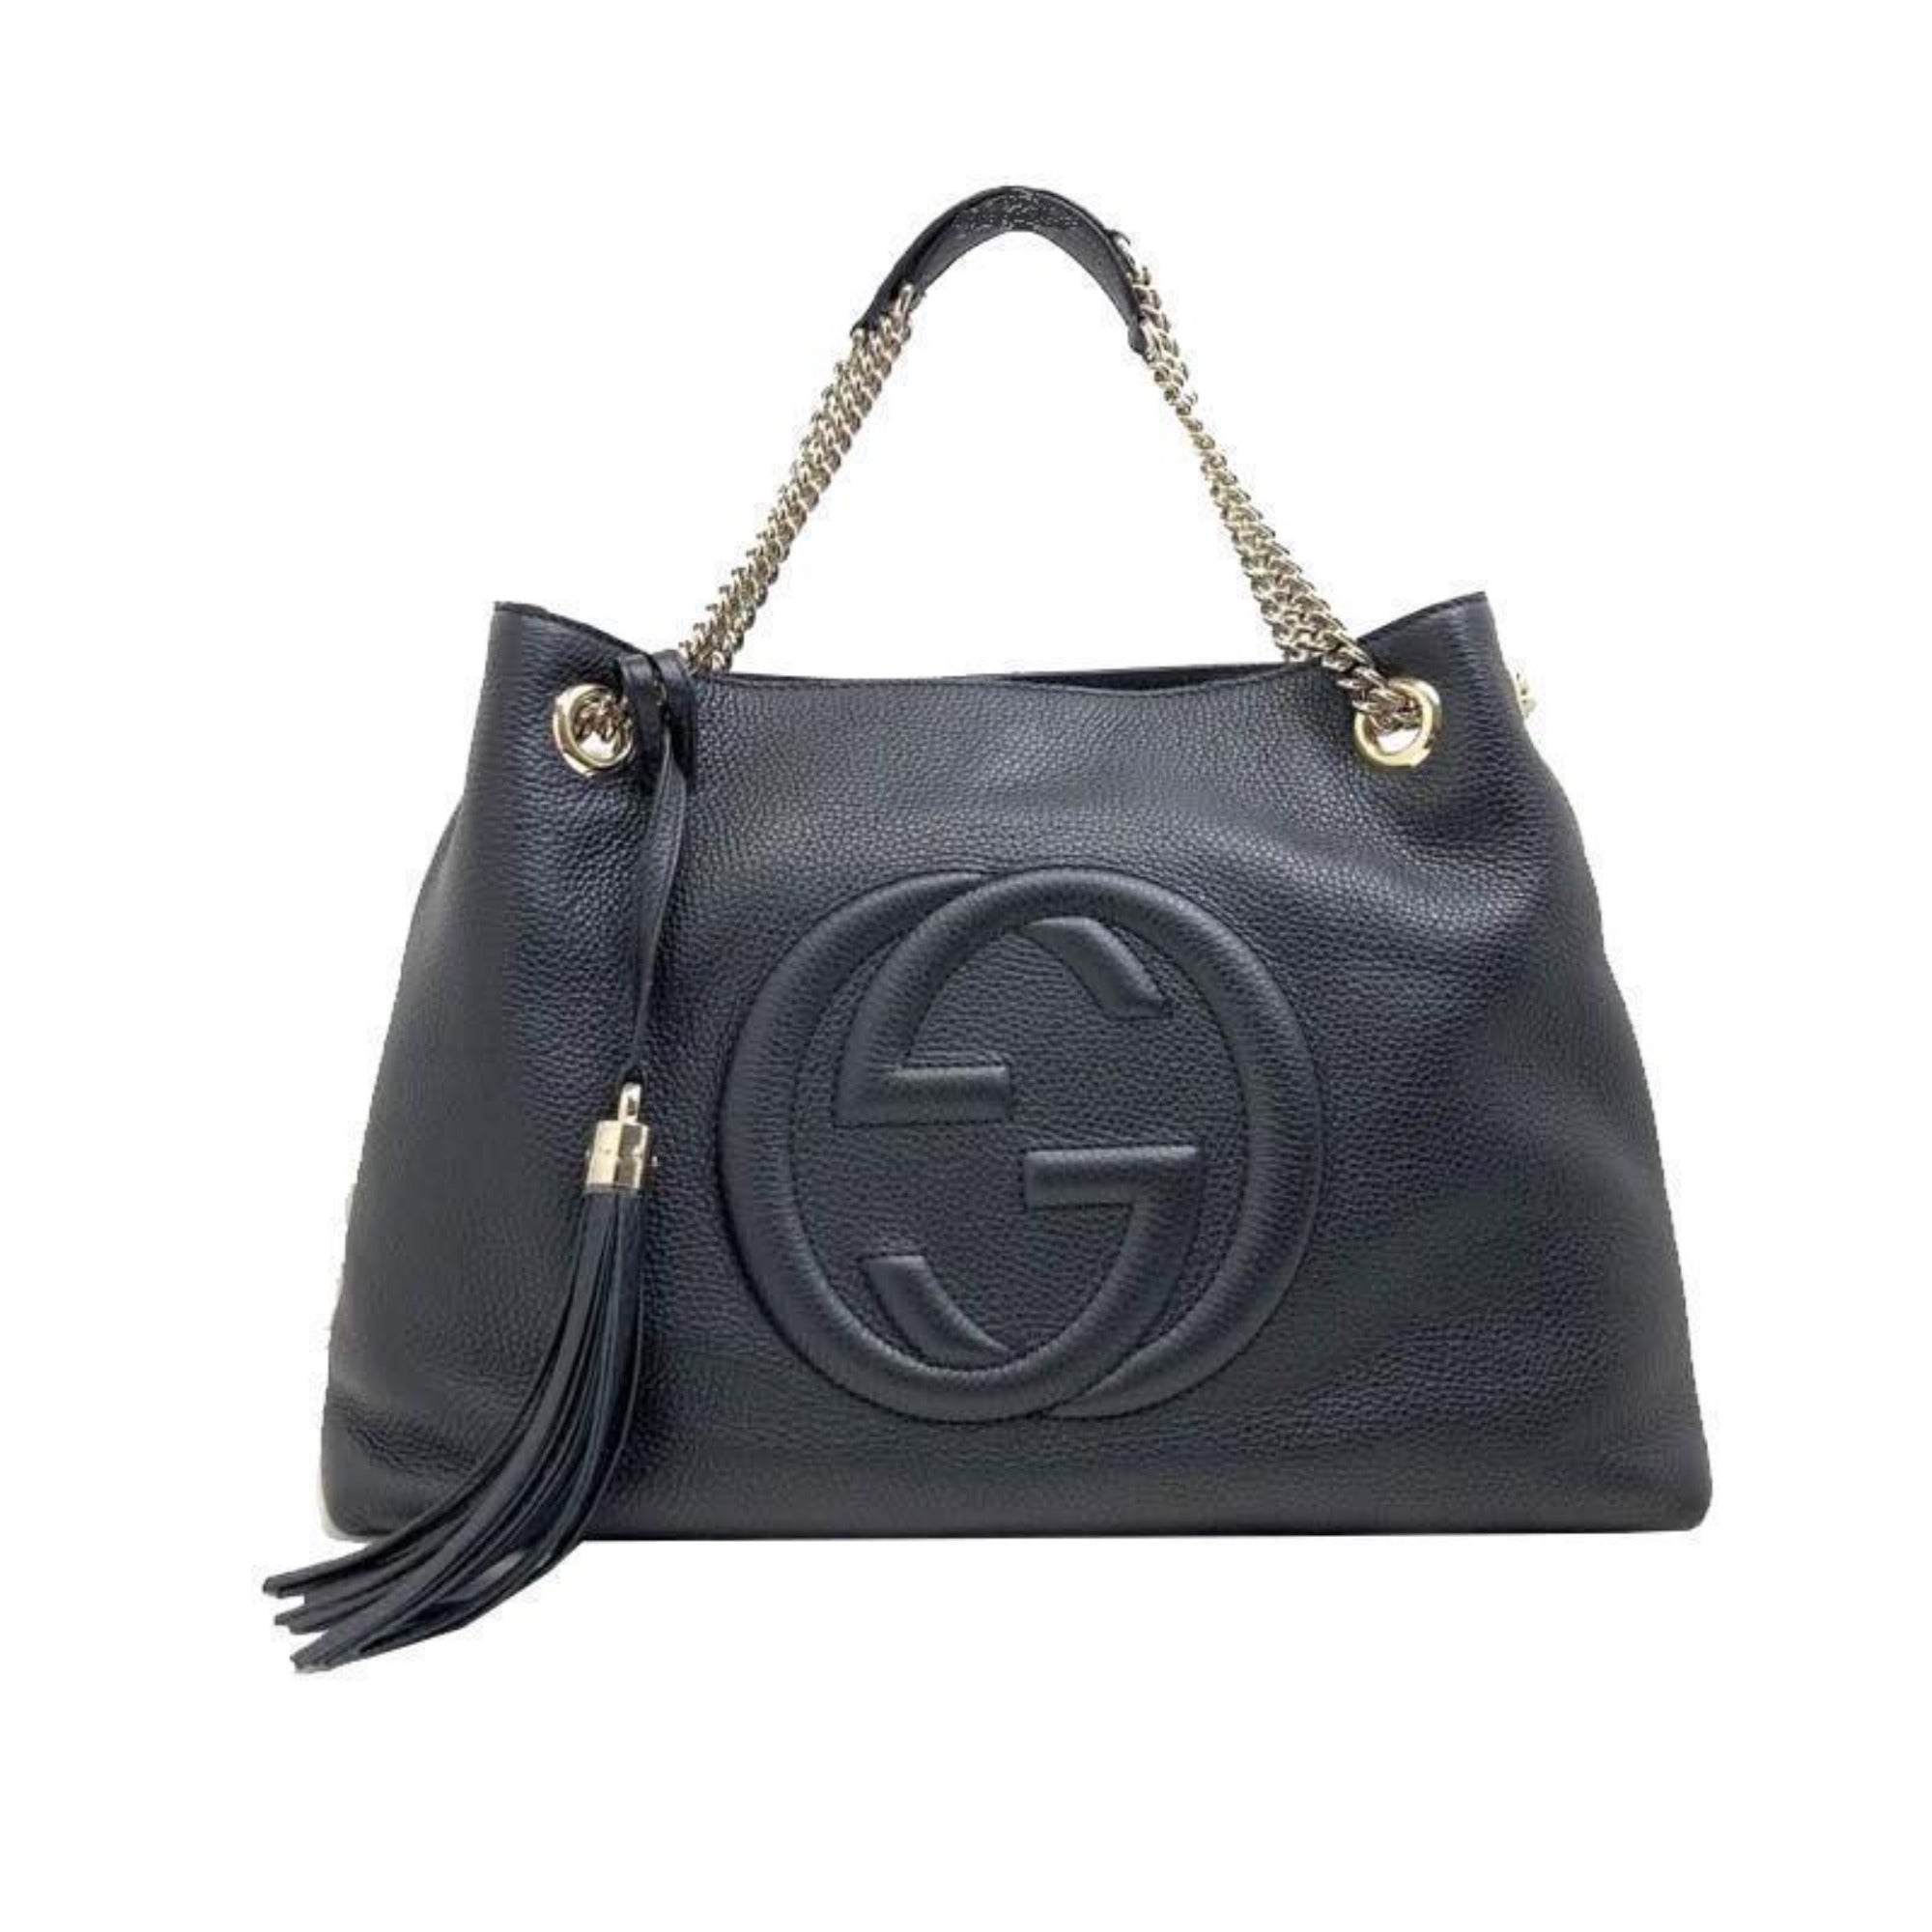 GUCCI black GG Monogram shoulder bag purse | Purses and bags, Gucci black,  Bags